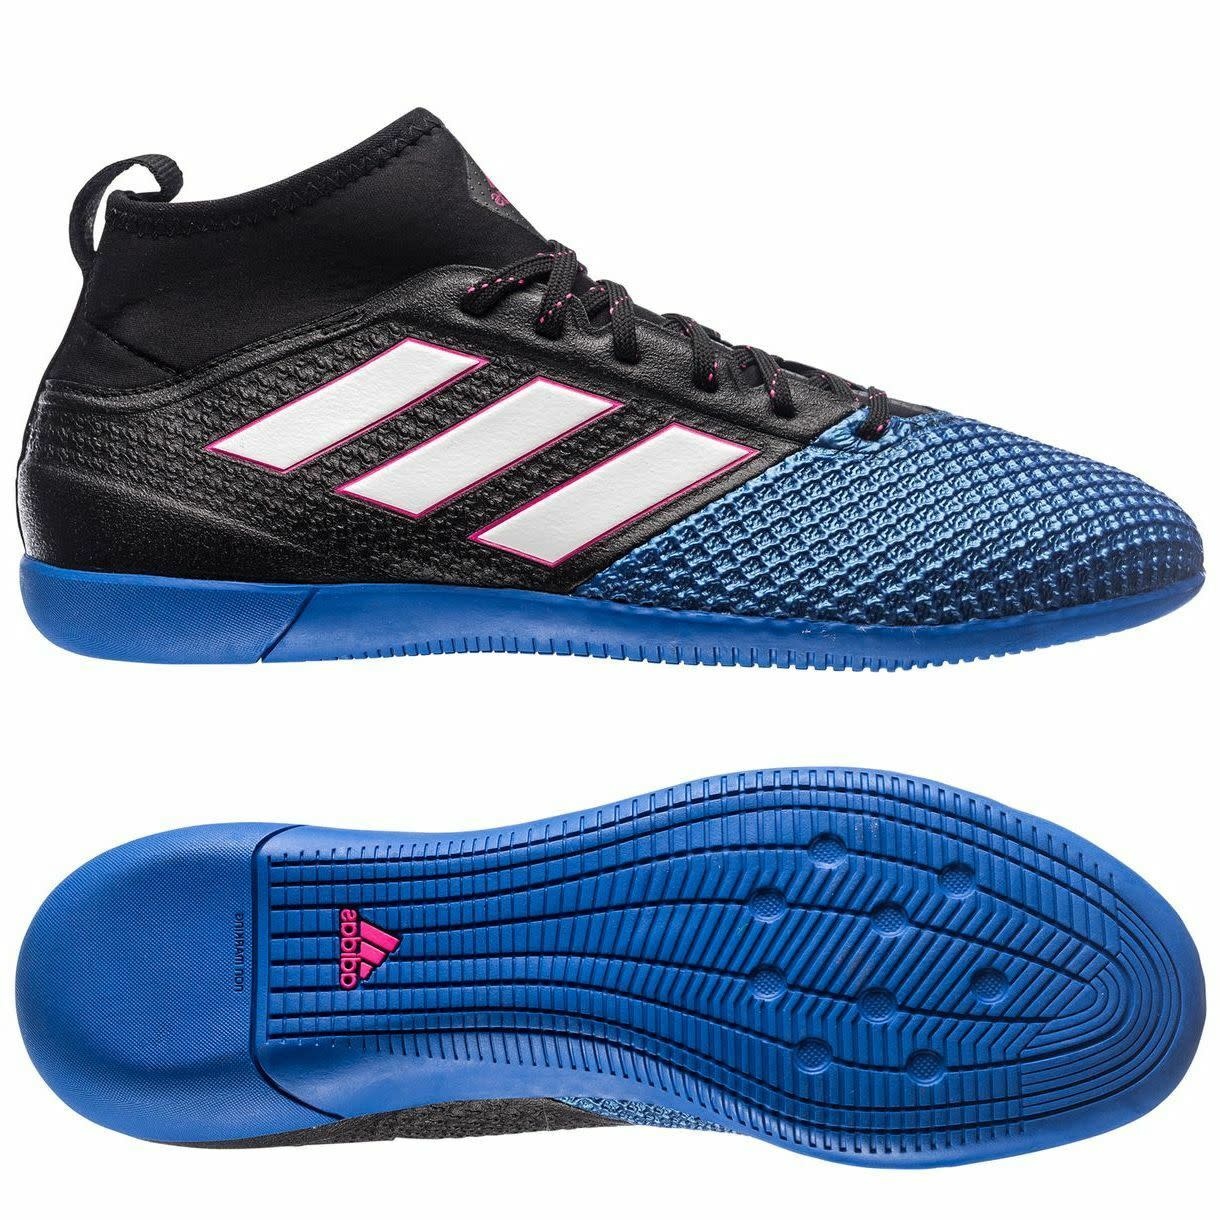 adidas Jr Ace Primemesh IN Indoor Soccer Shoe Black Blue - Soccerium